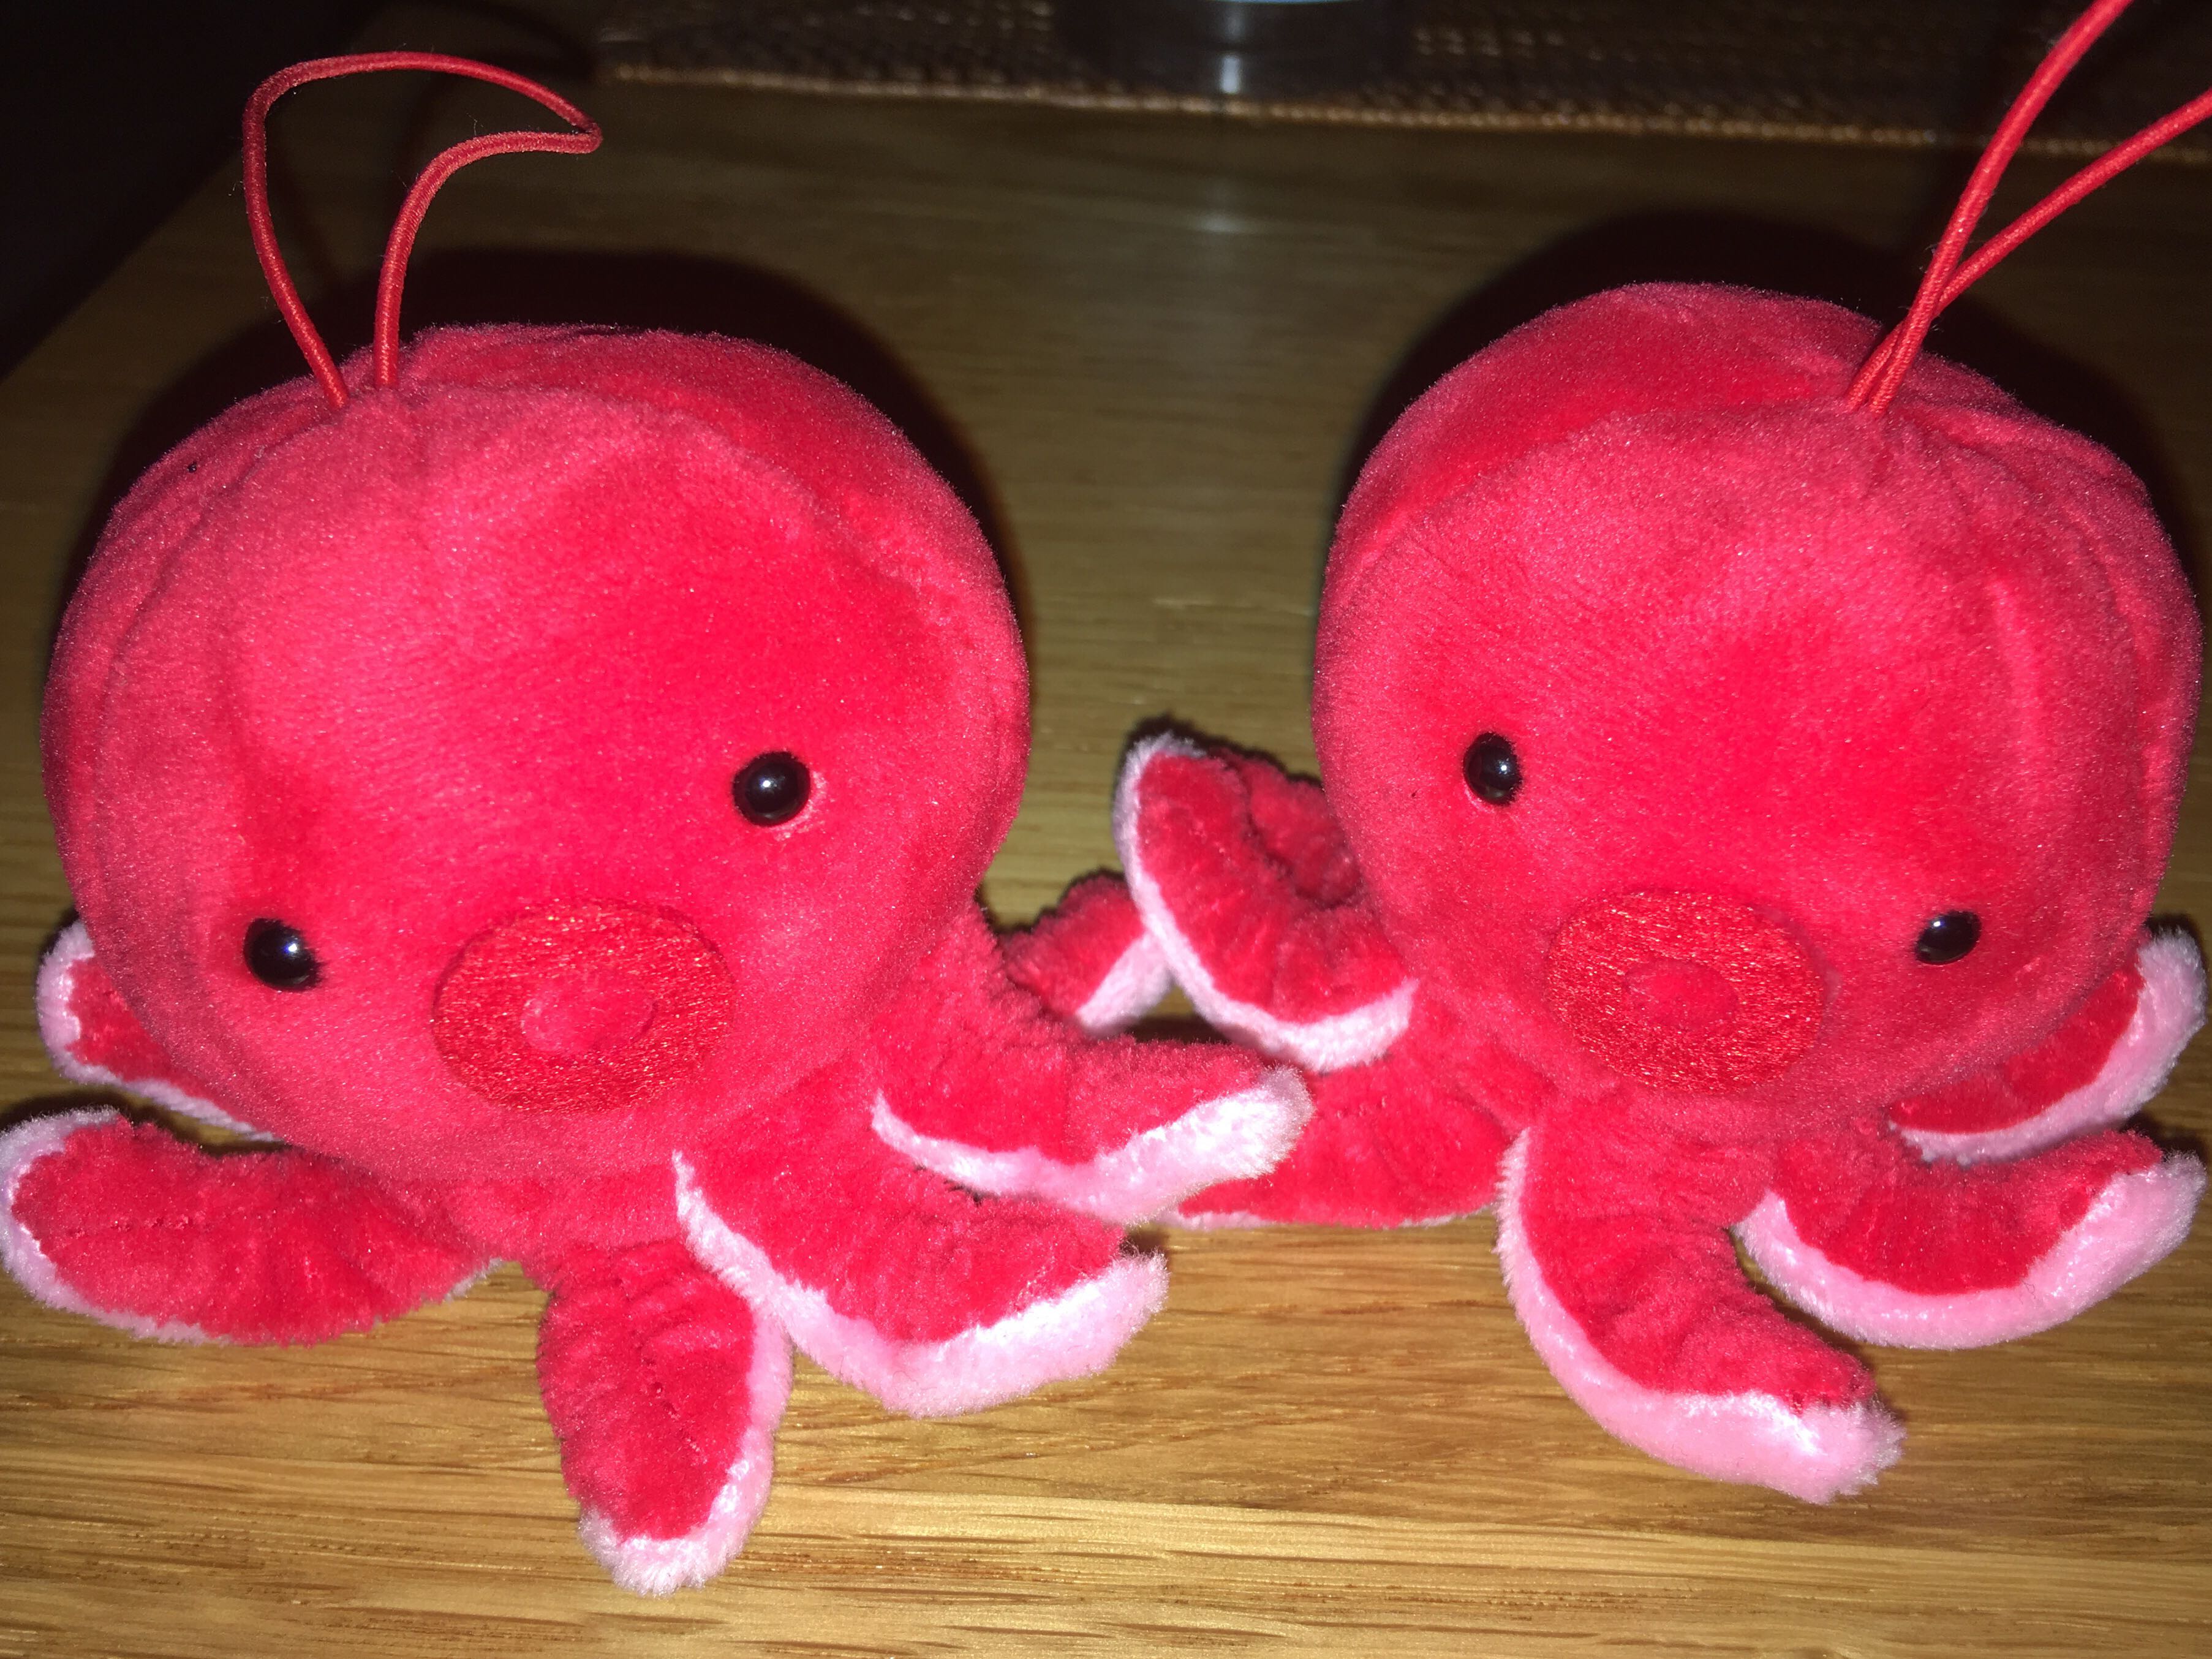 red octopus stuffed animal